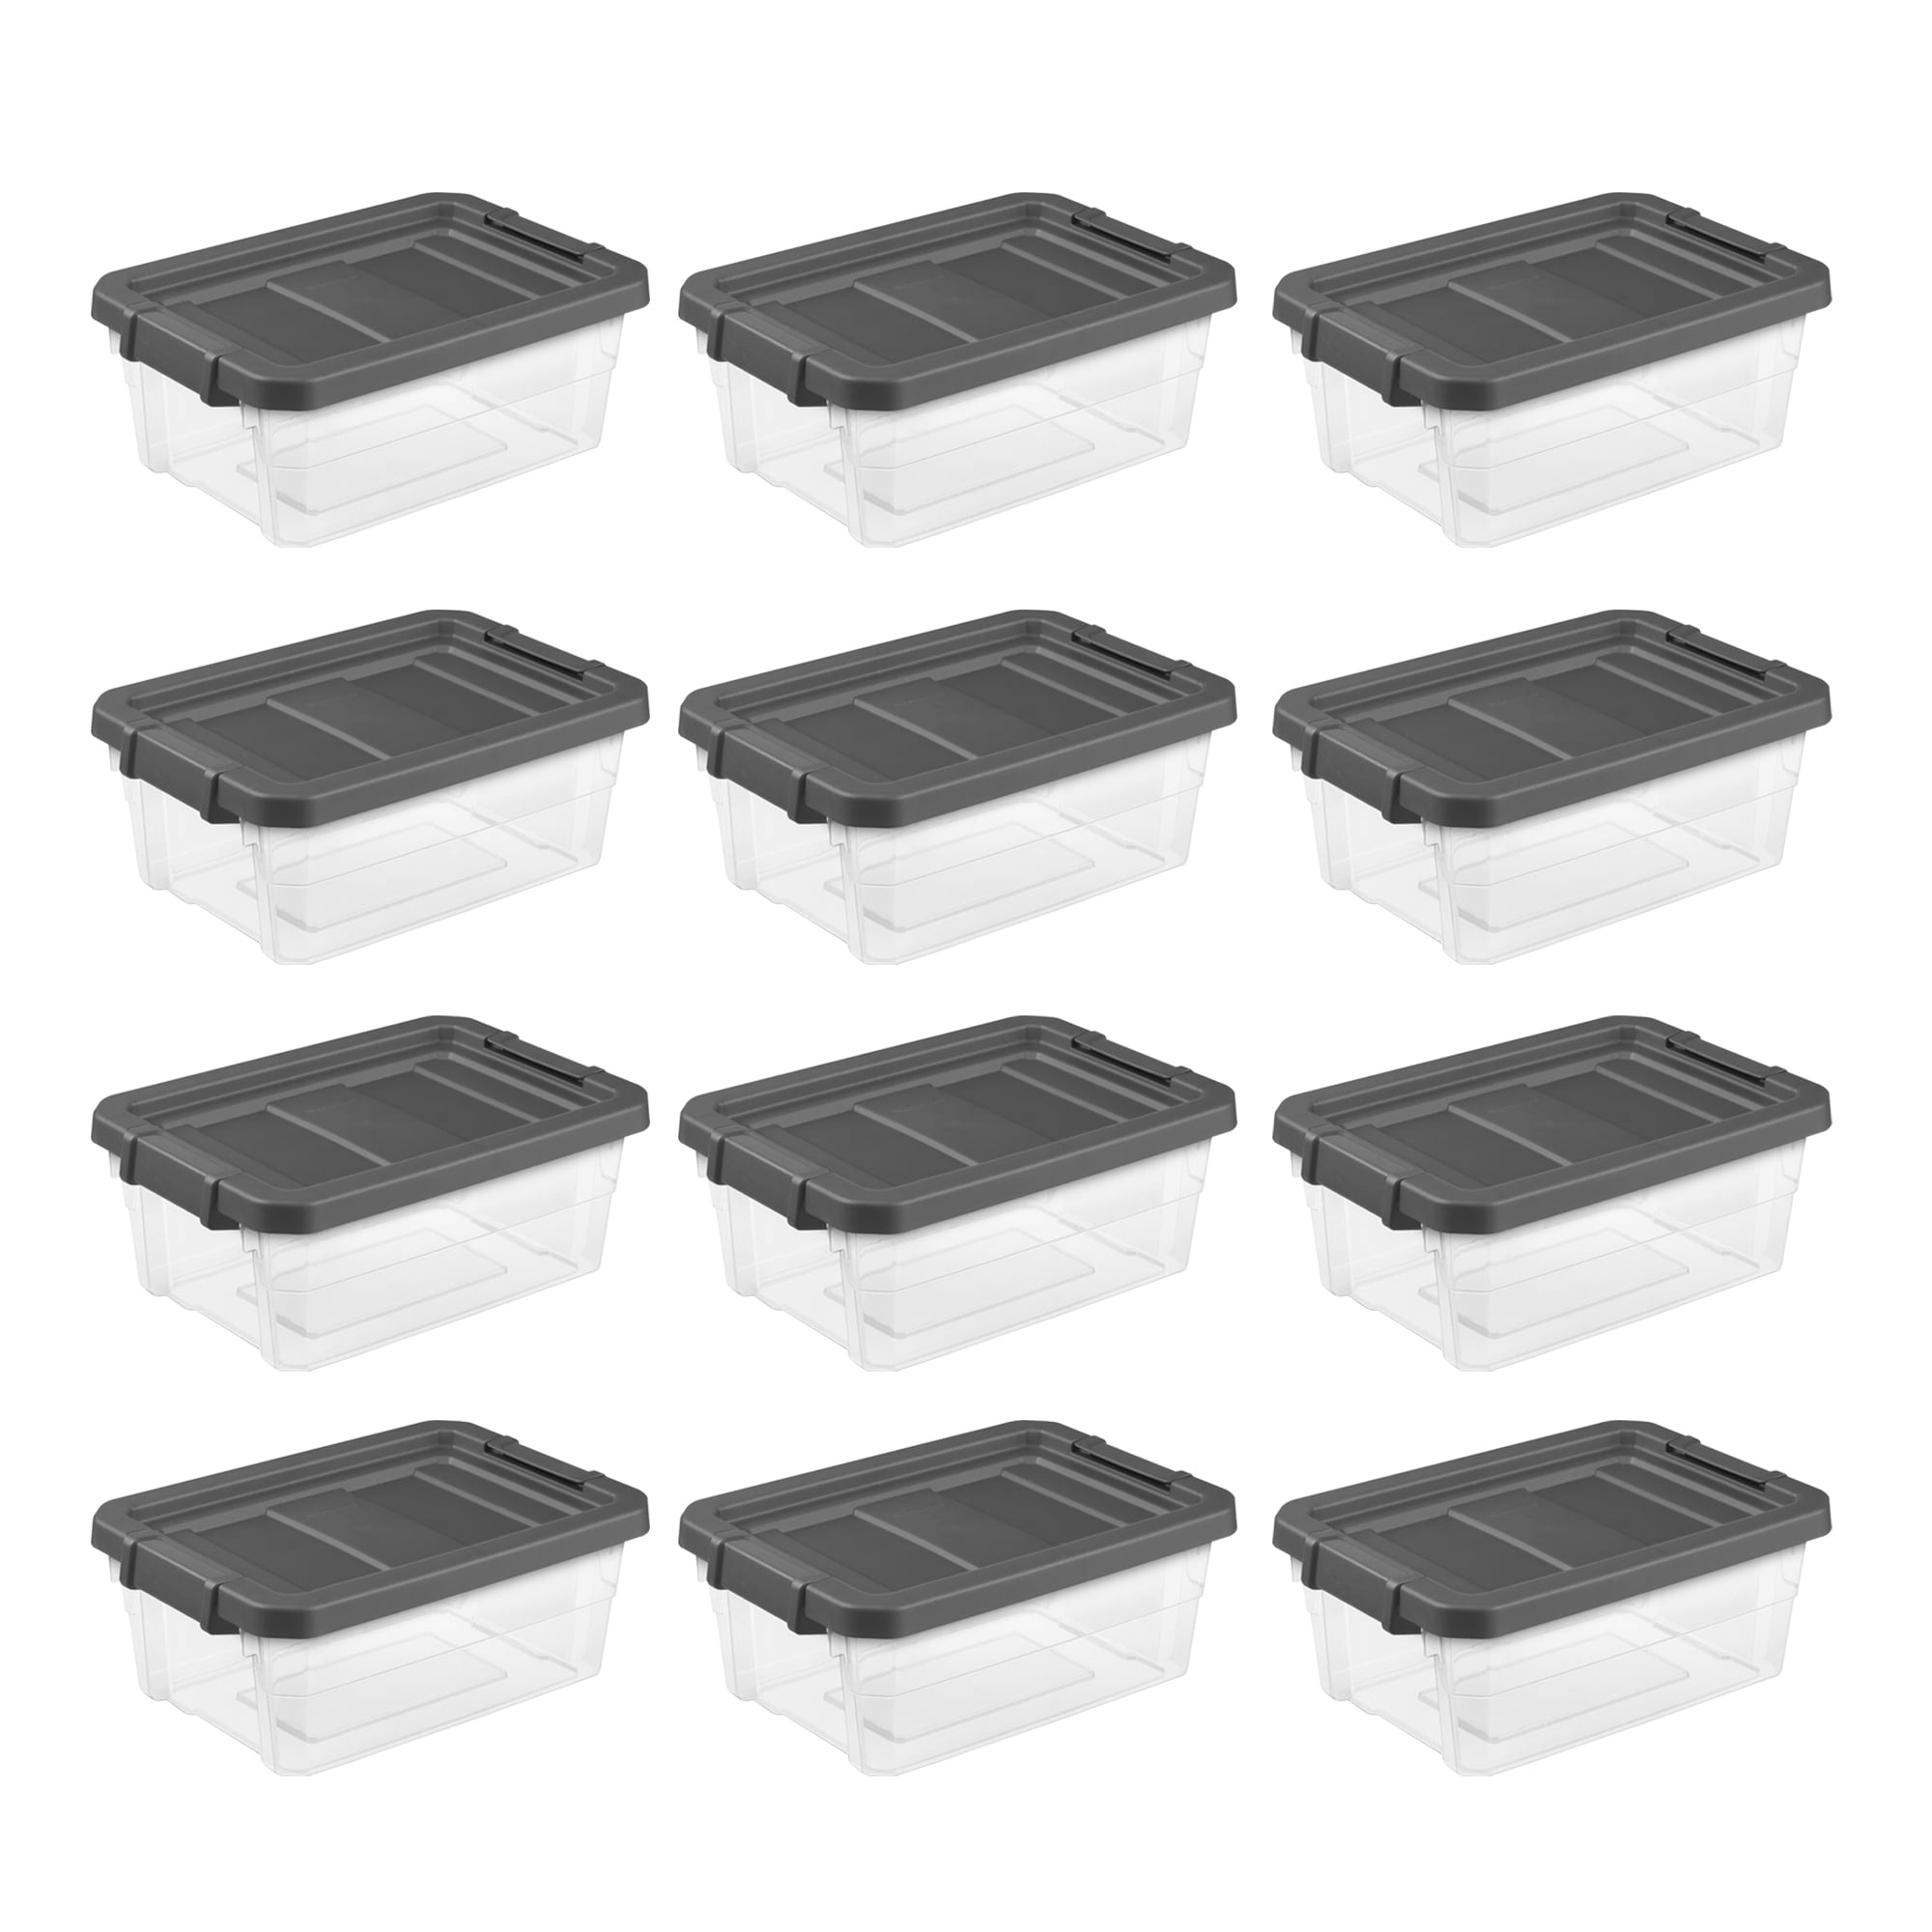 Sterilite Home Organization Stackable Open Storage Bin Container, Gray (12 Pack)